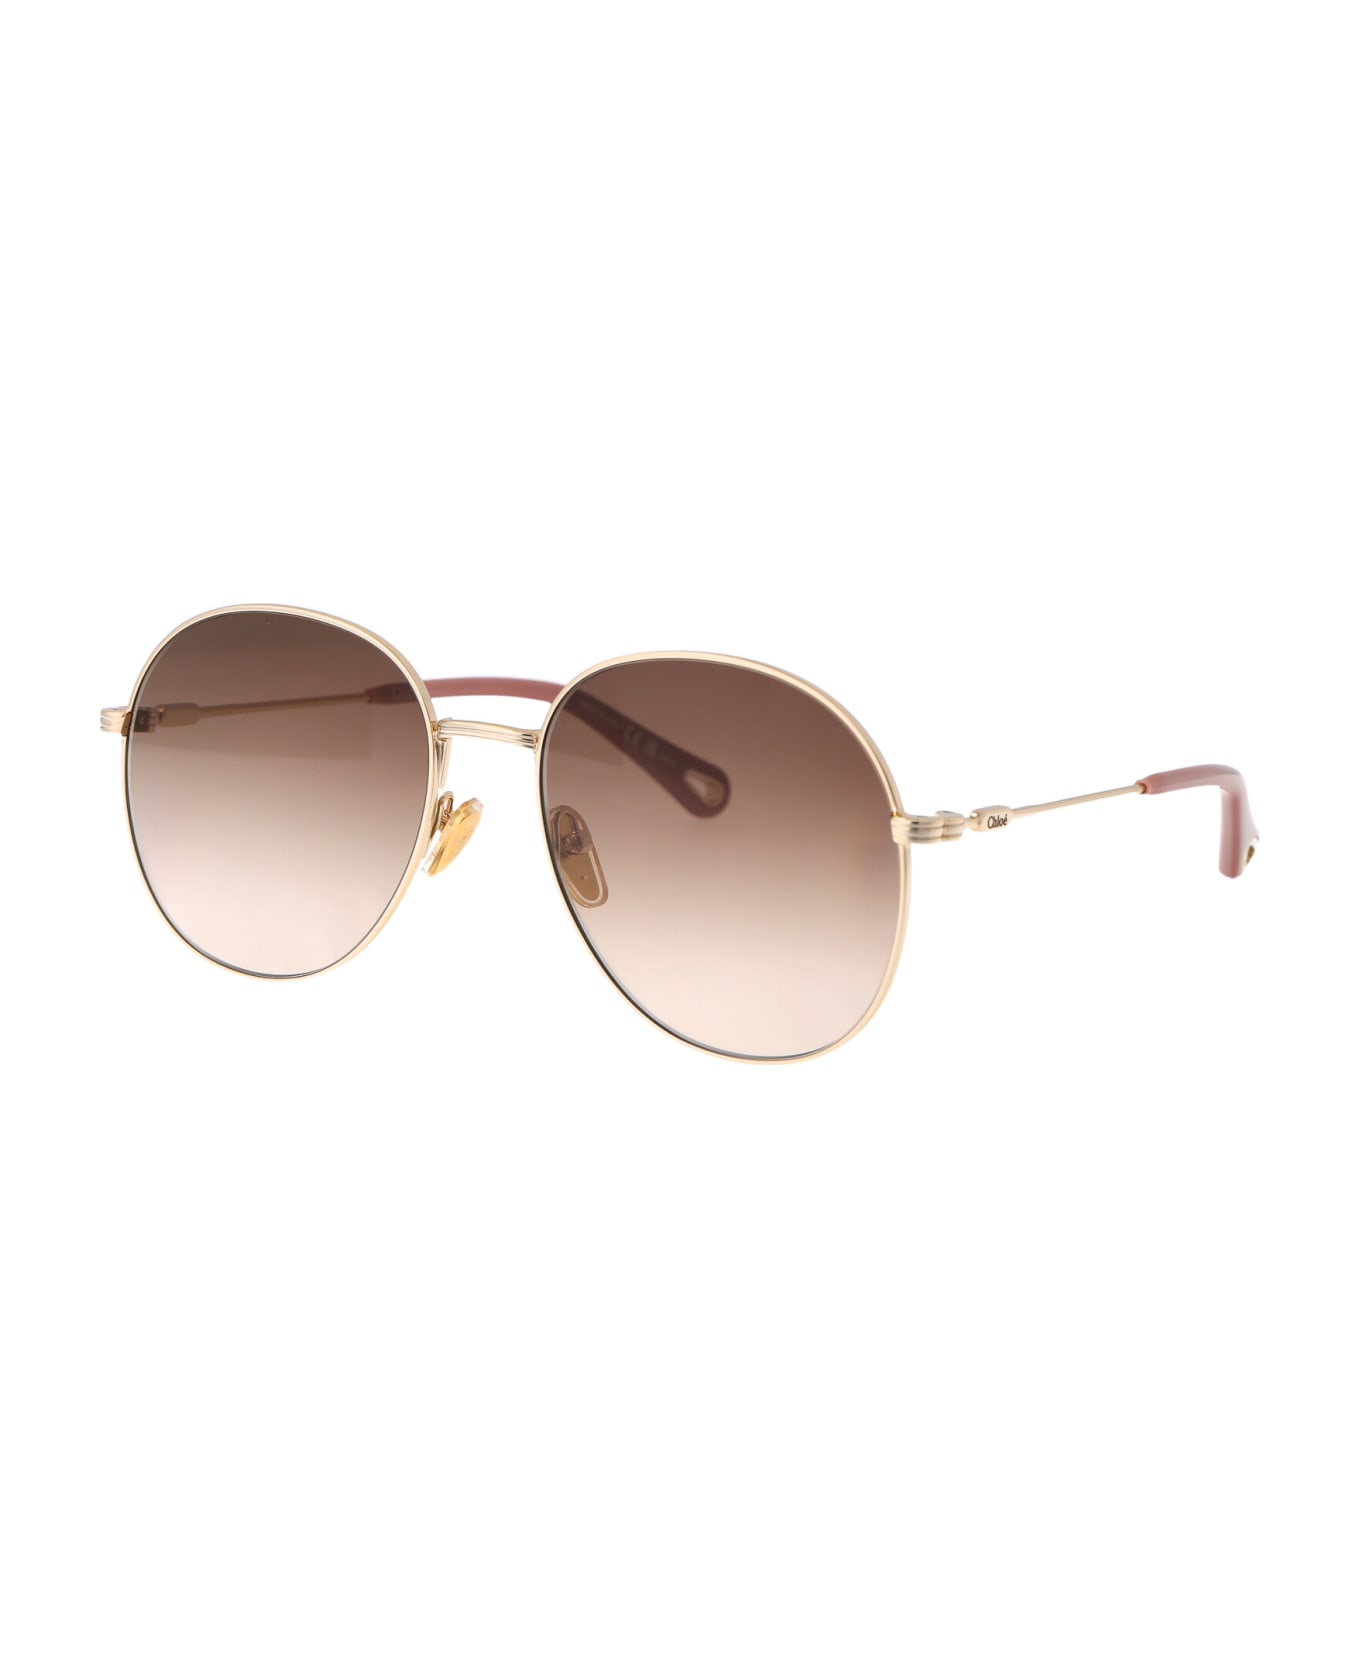 Chloé Eyewear Ch0178s Sunglasses - 002 GOLD GOLD BROWN サングラス